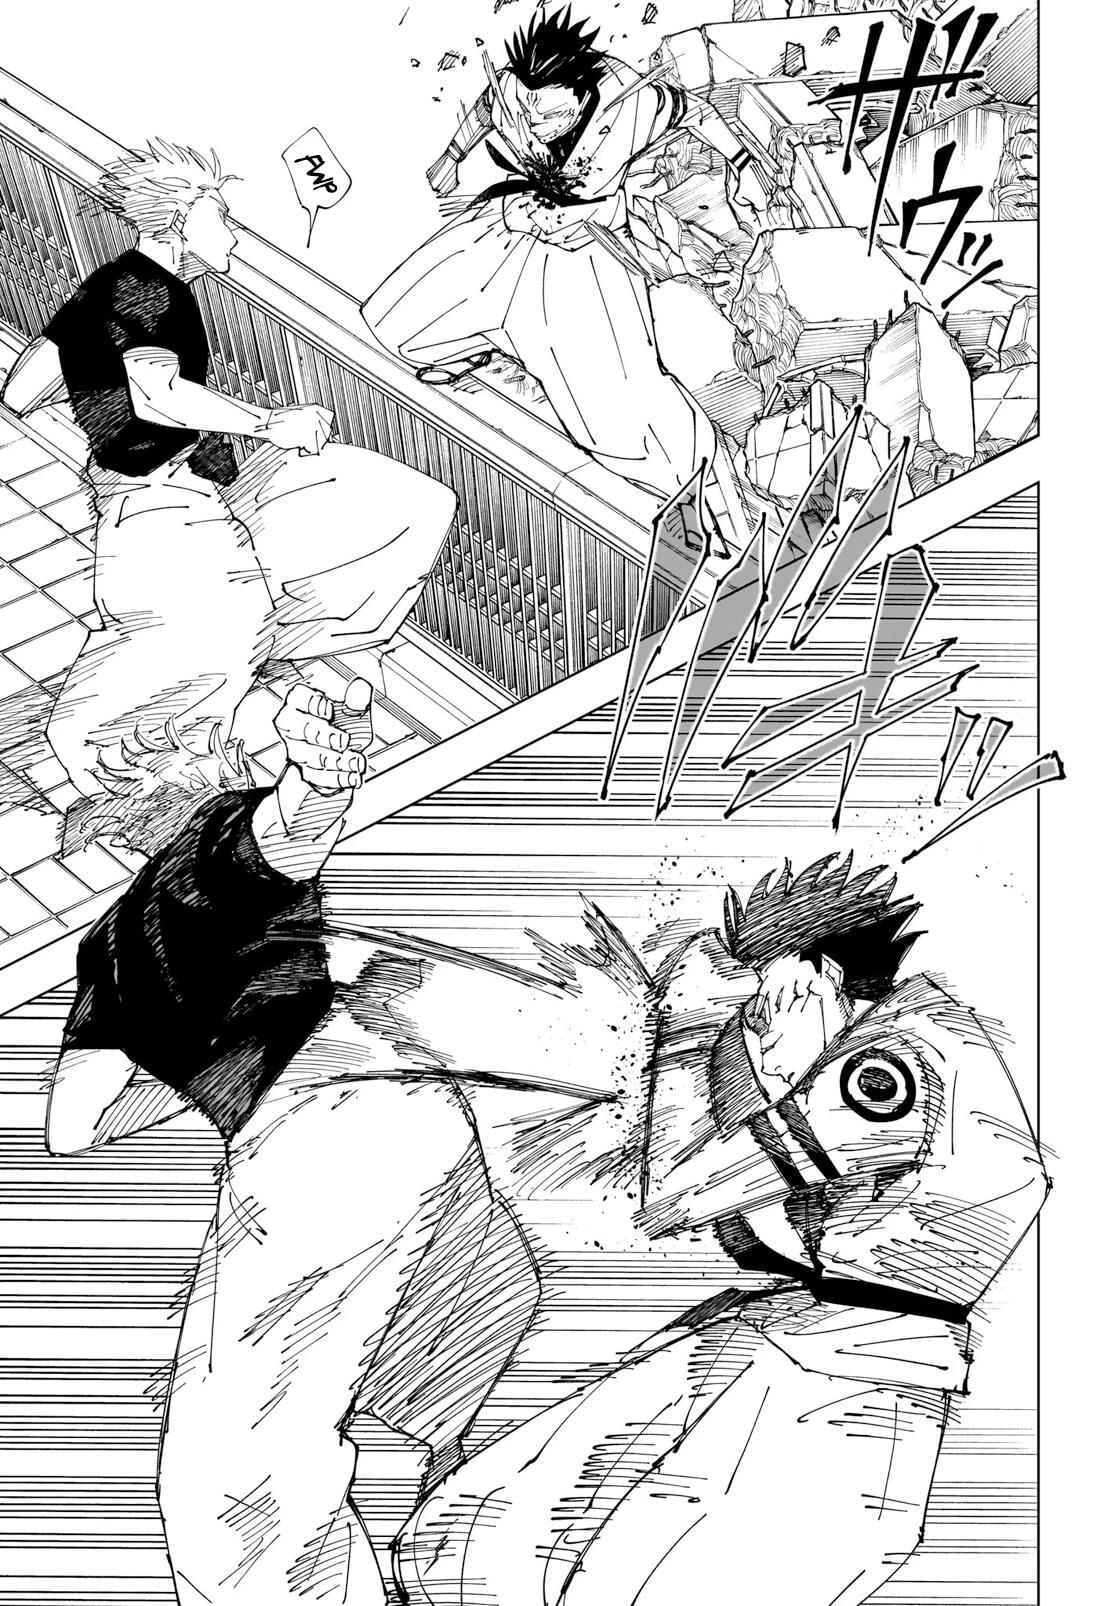 Jujutsu Kaisen Chapter 228: The Decisive Battle In The Uninhabited, Demon-Infested Shinjuku ⑥ page 17 - Mangakakalot